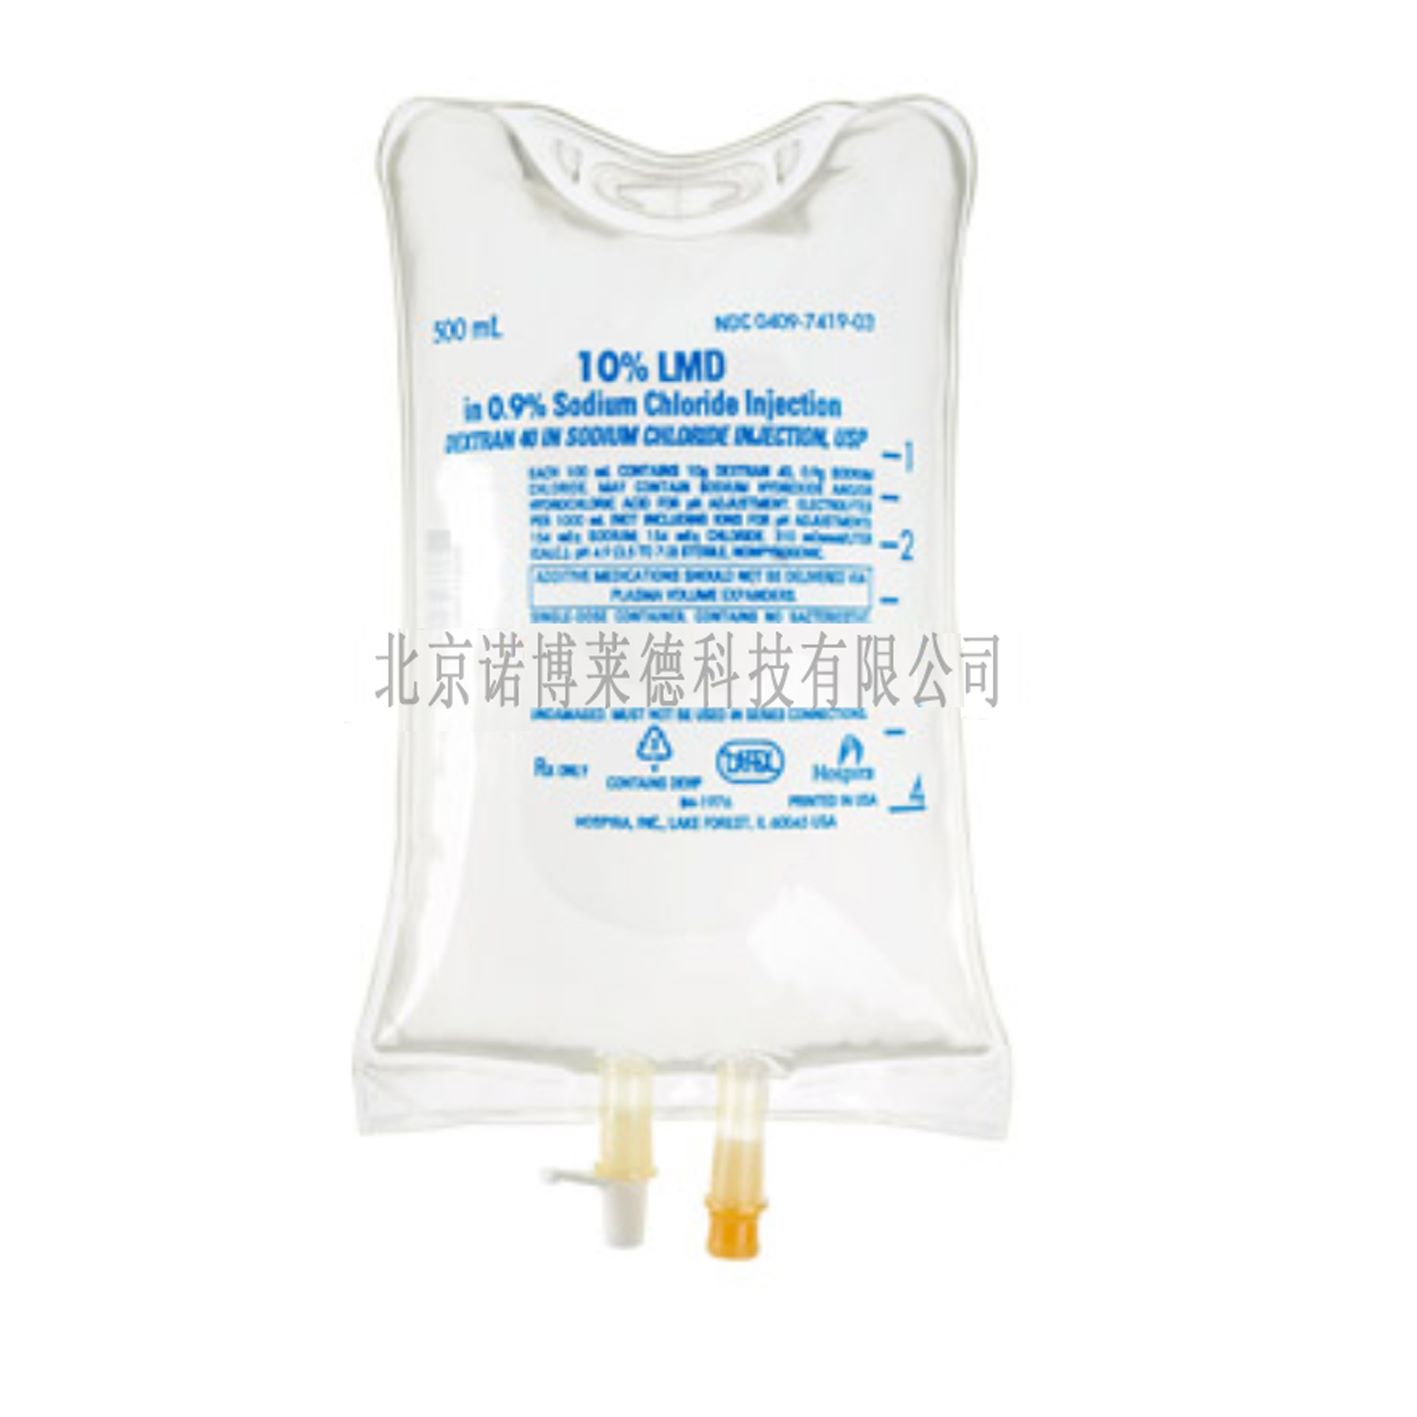 Hospira 0409-7419-03 10% LMD in 0.9% Sodium Chloride Injection DEX40右旋糖酐